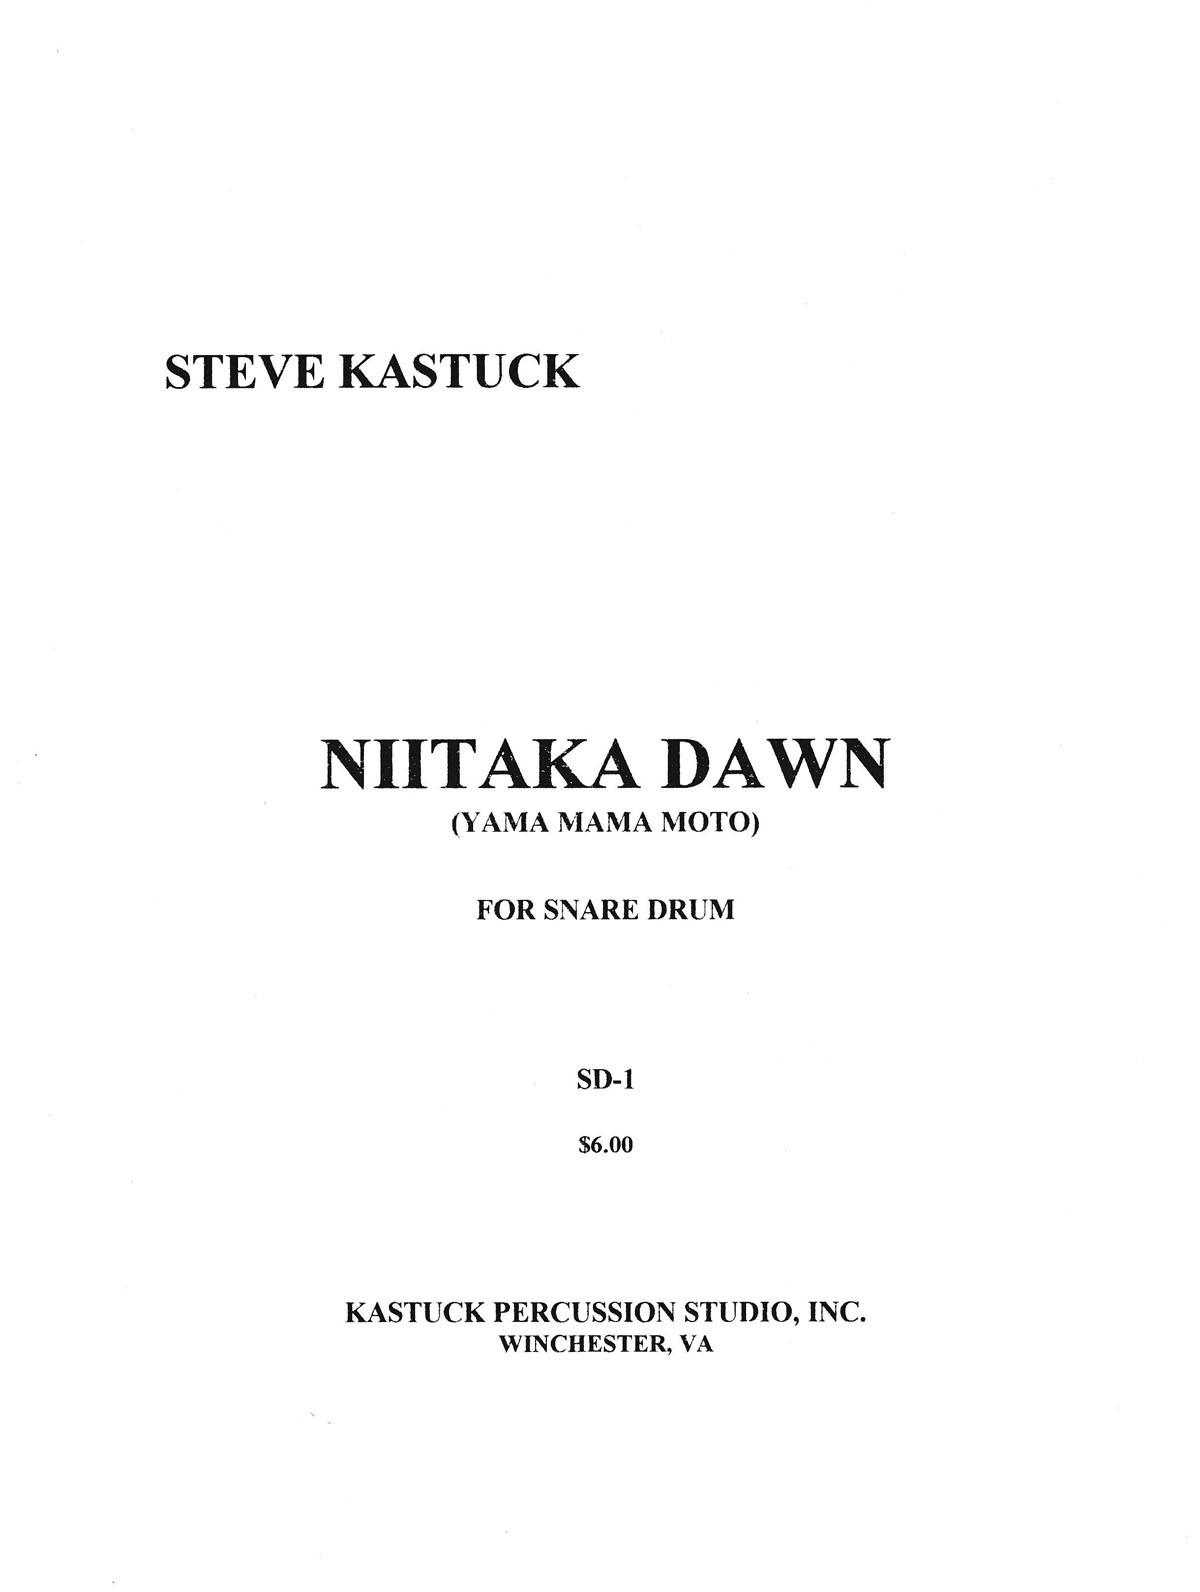 Nikita Dawn (Yama Mama Moto) by Steve Kastuck